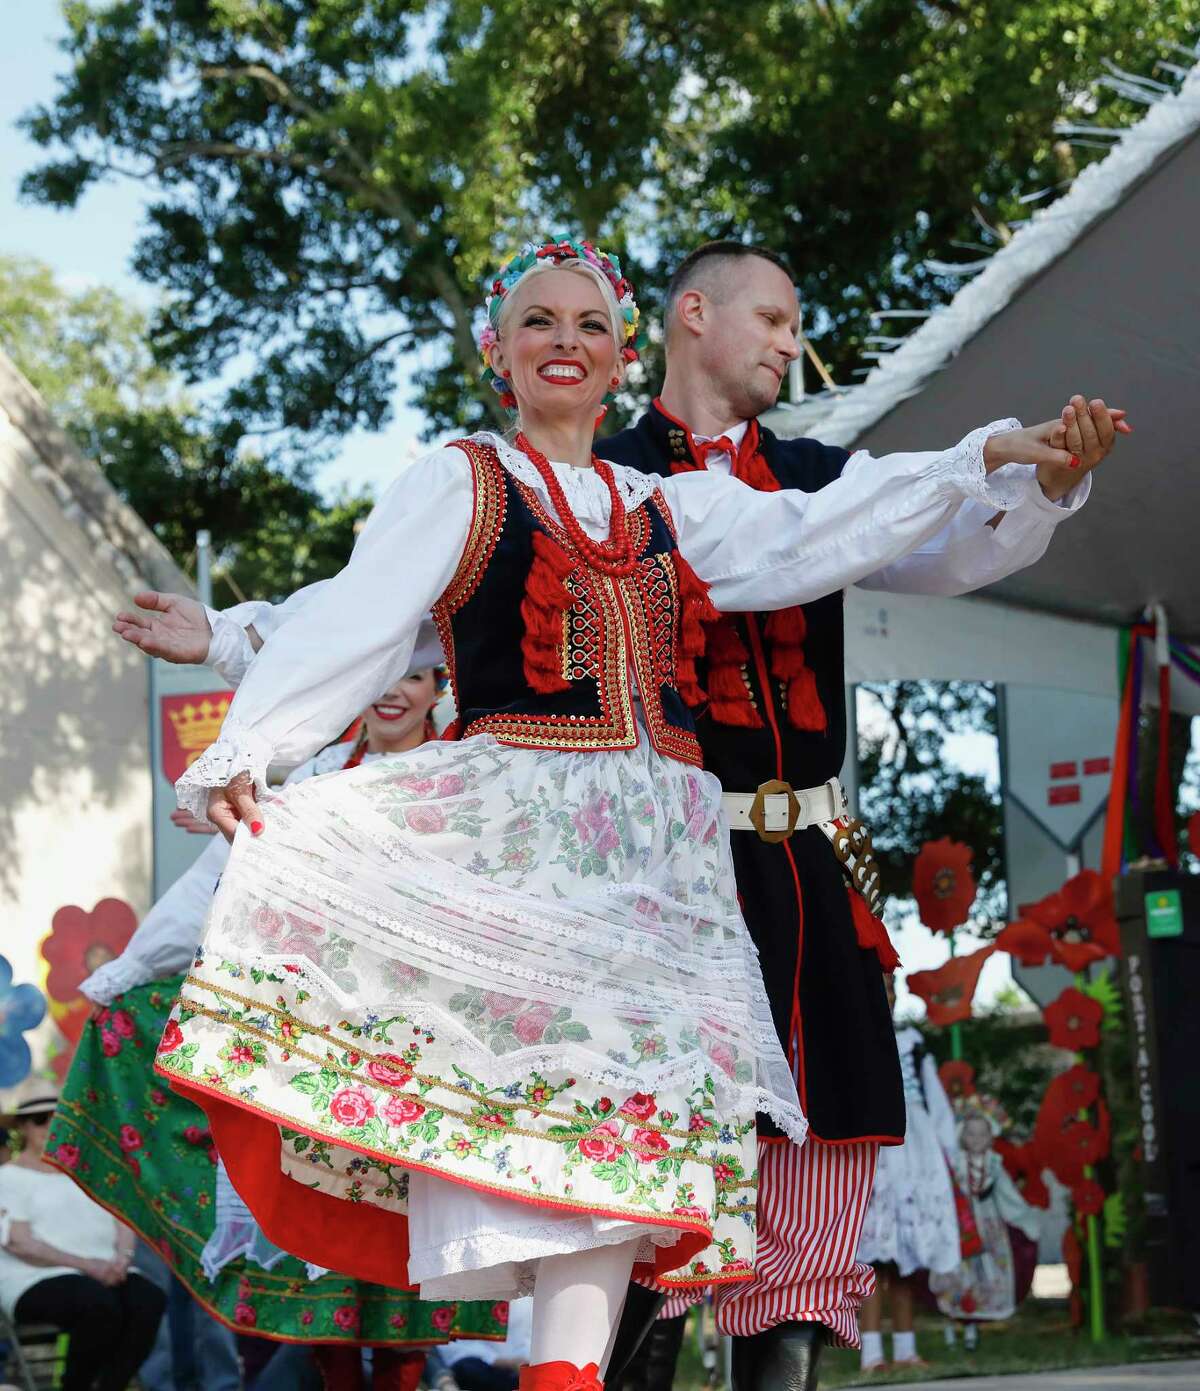 Houston's 2018 Polish Festival at Our Lady of Czestochowa Parish